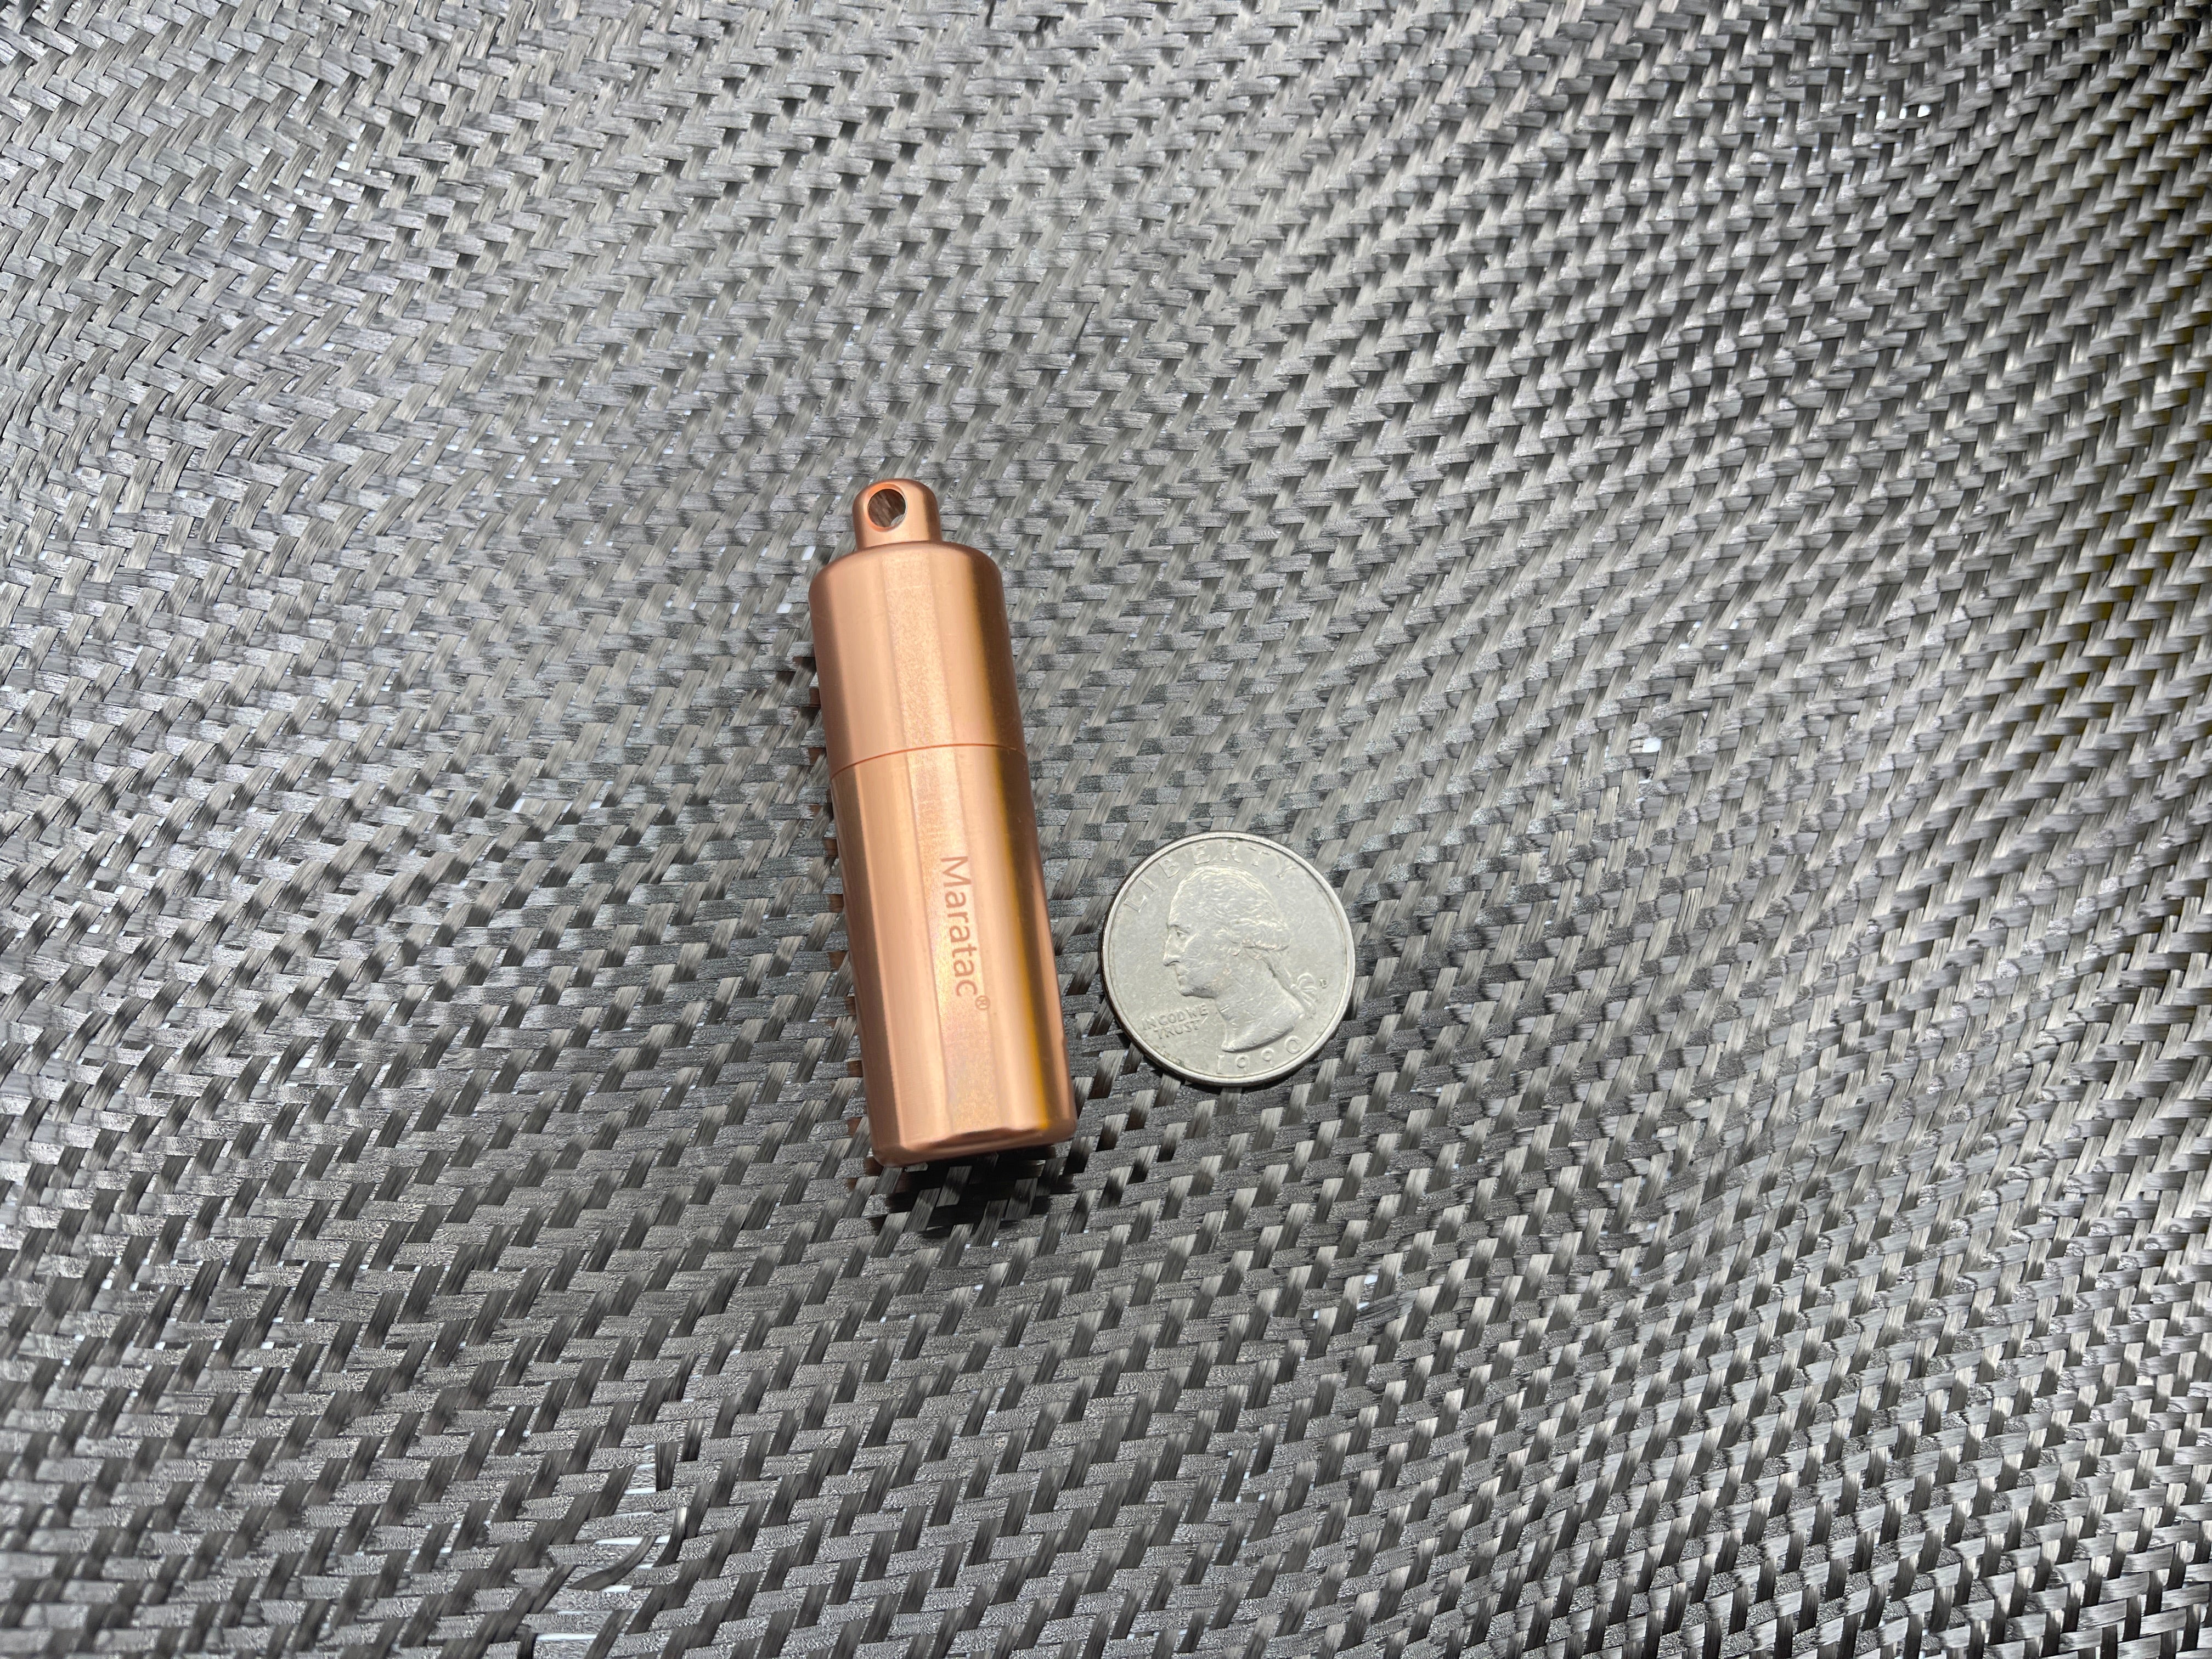 Gas lighter brass, Large